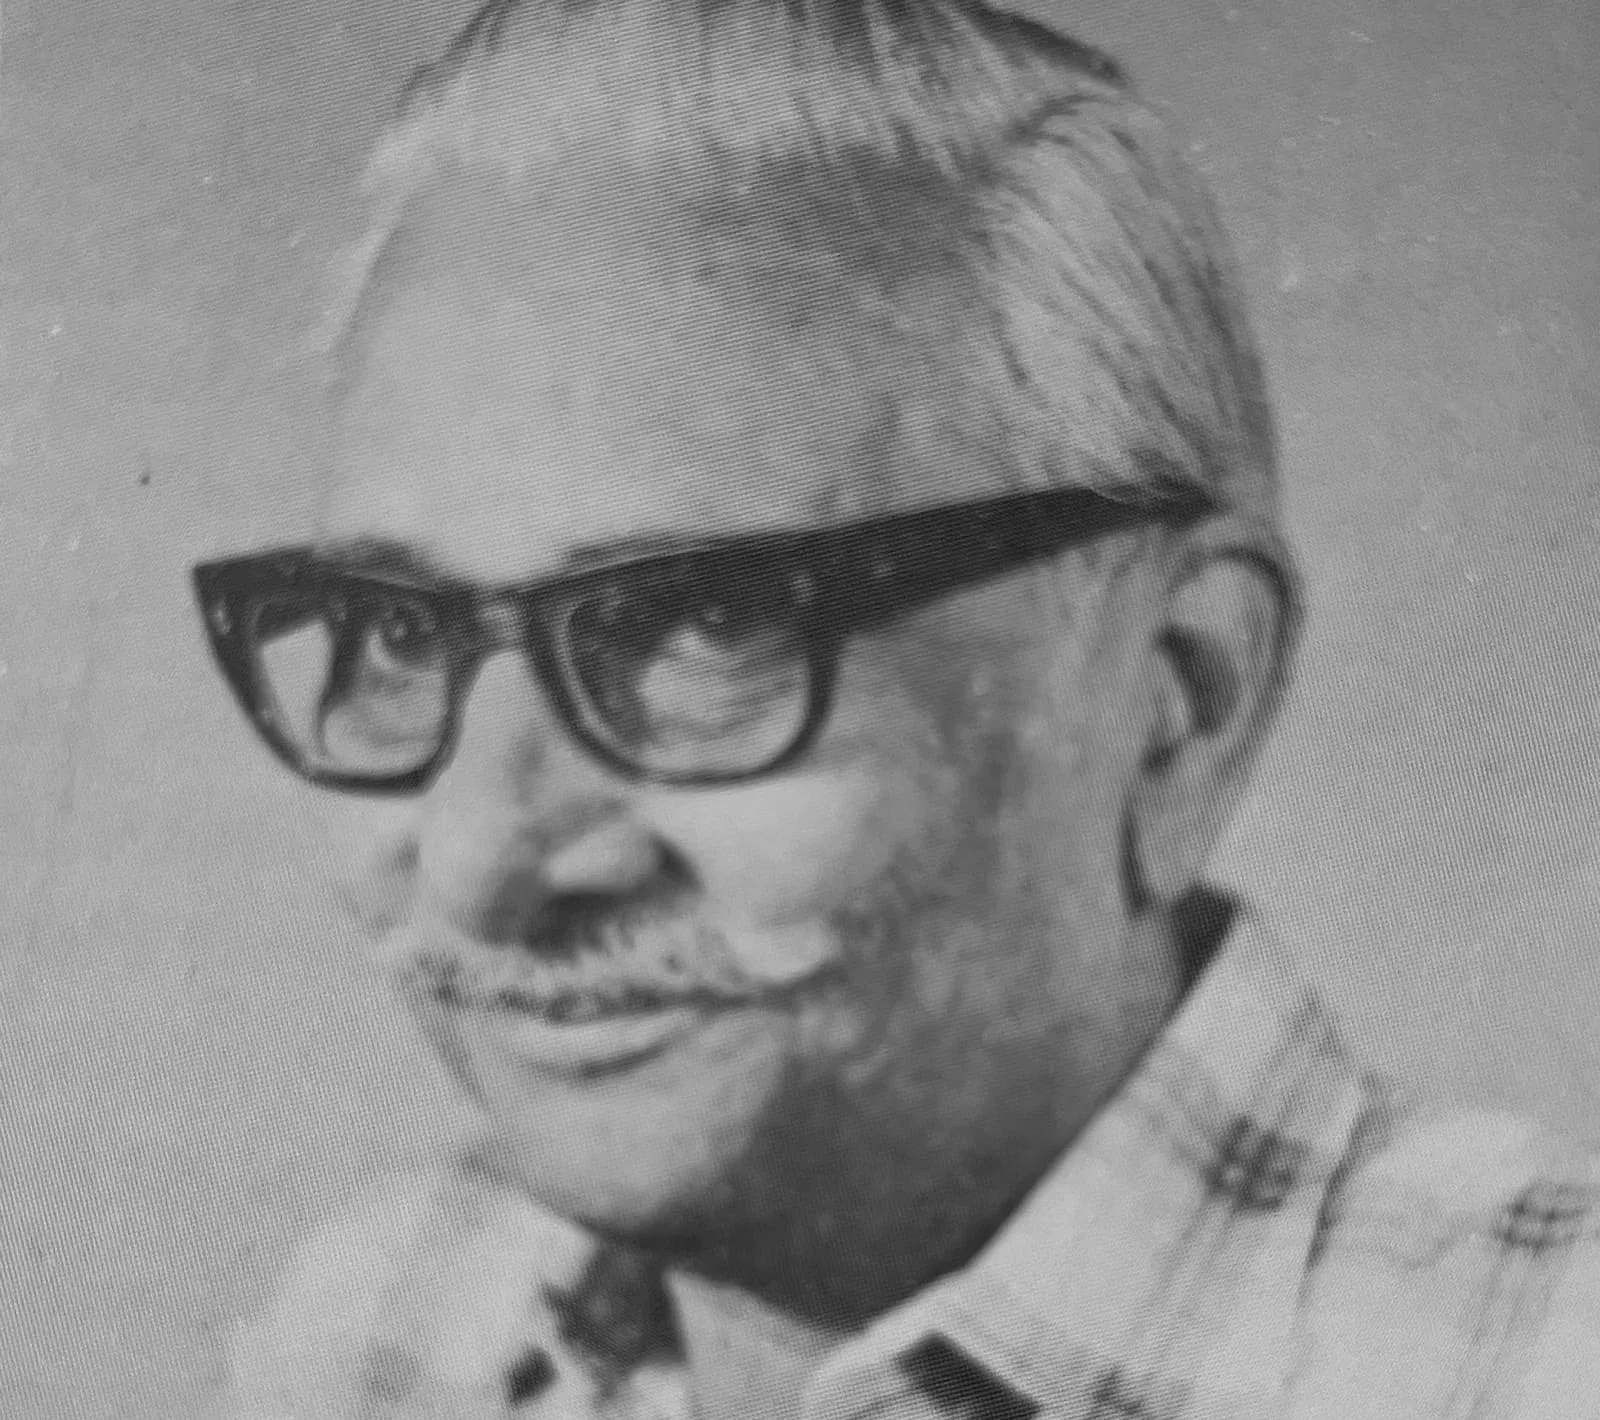 Kumar Mangal Sinhji